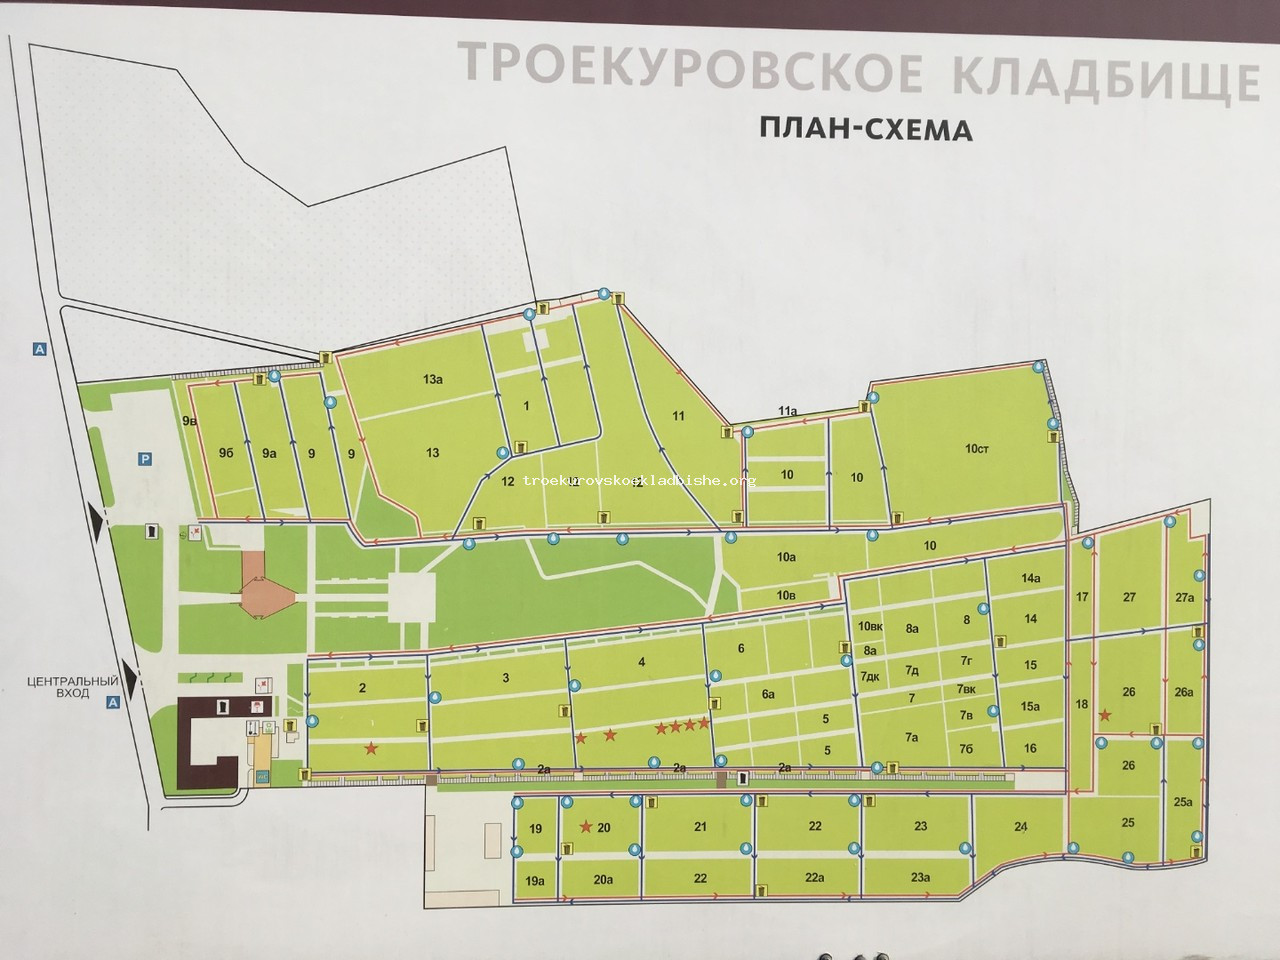 План-схема участков Троекуровского кладбища